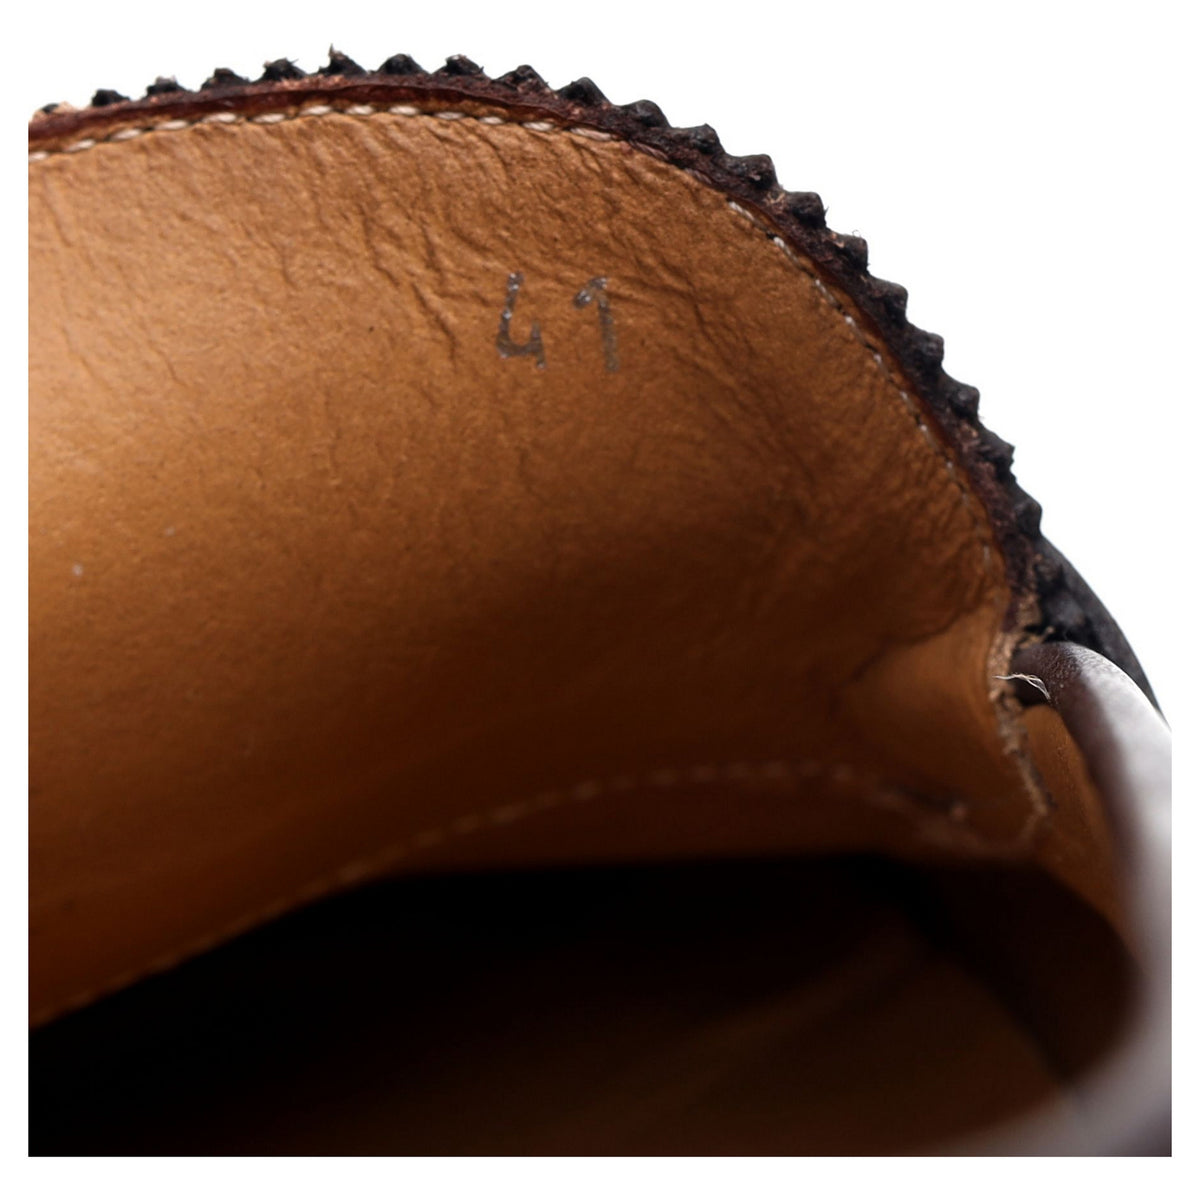 Dark Brown Leather Loafers UK 7 EU 41